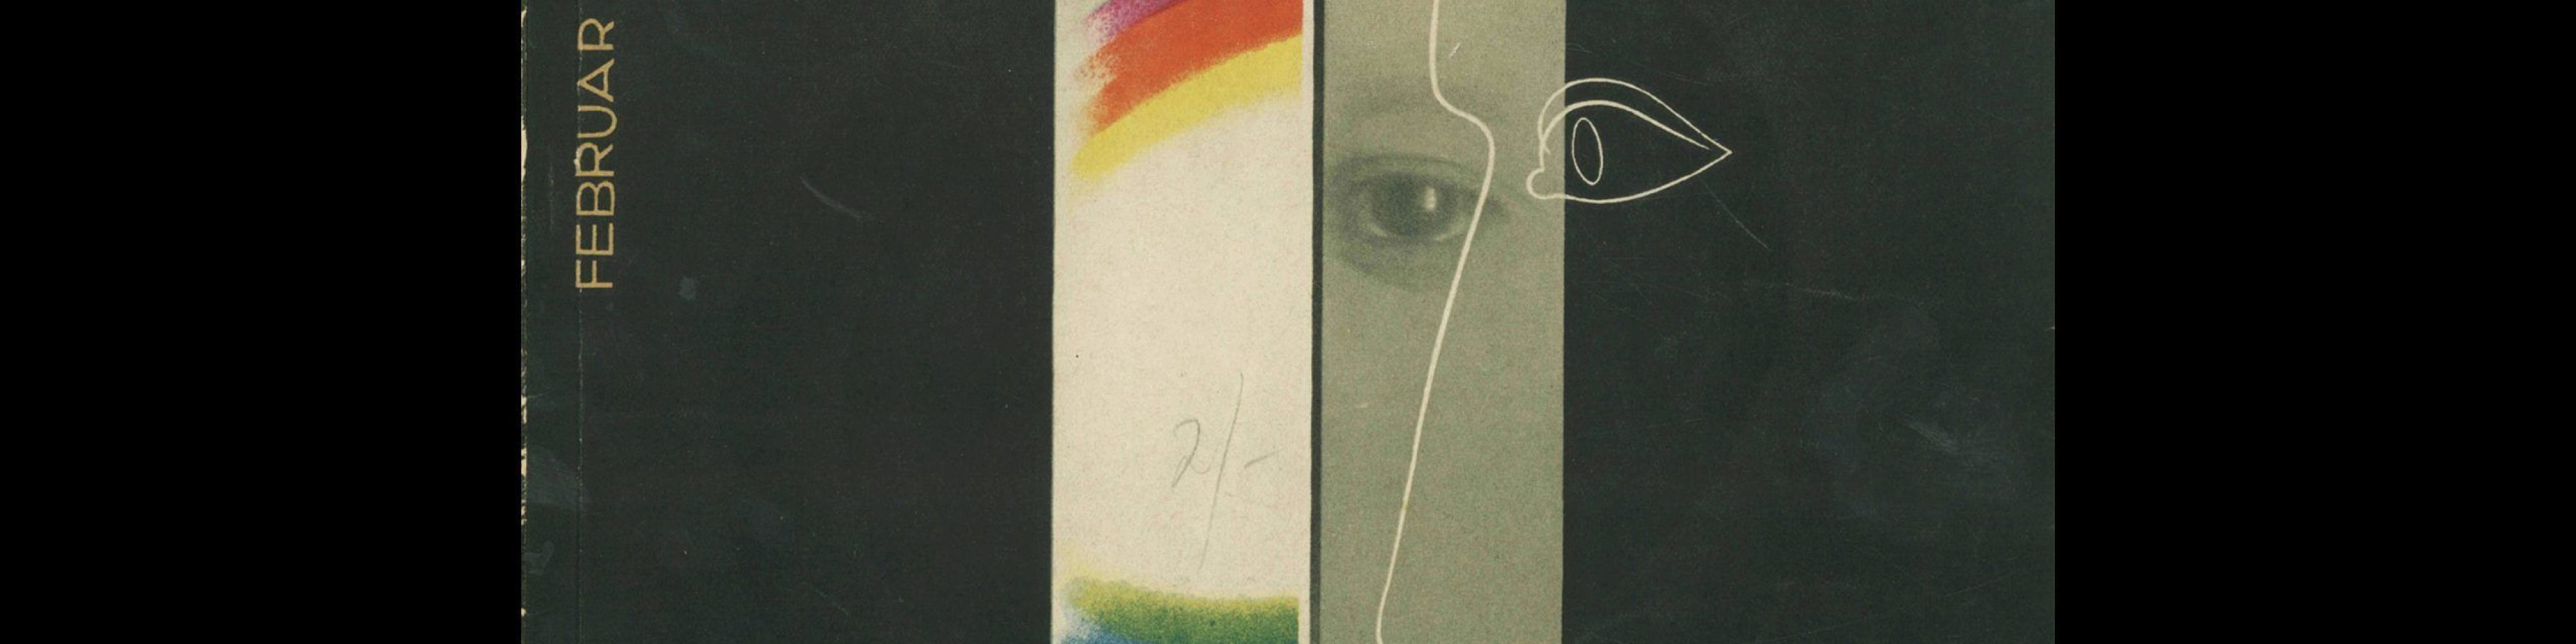 Gebrauchsgraphik, 2, 1931. Cover design by Jean Carlu